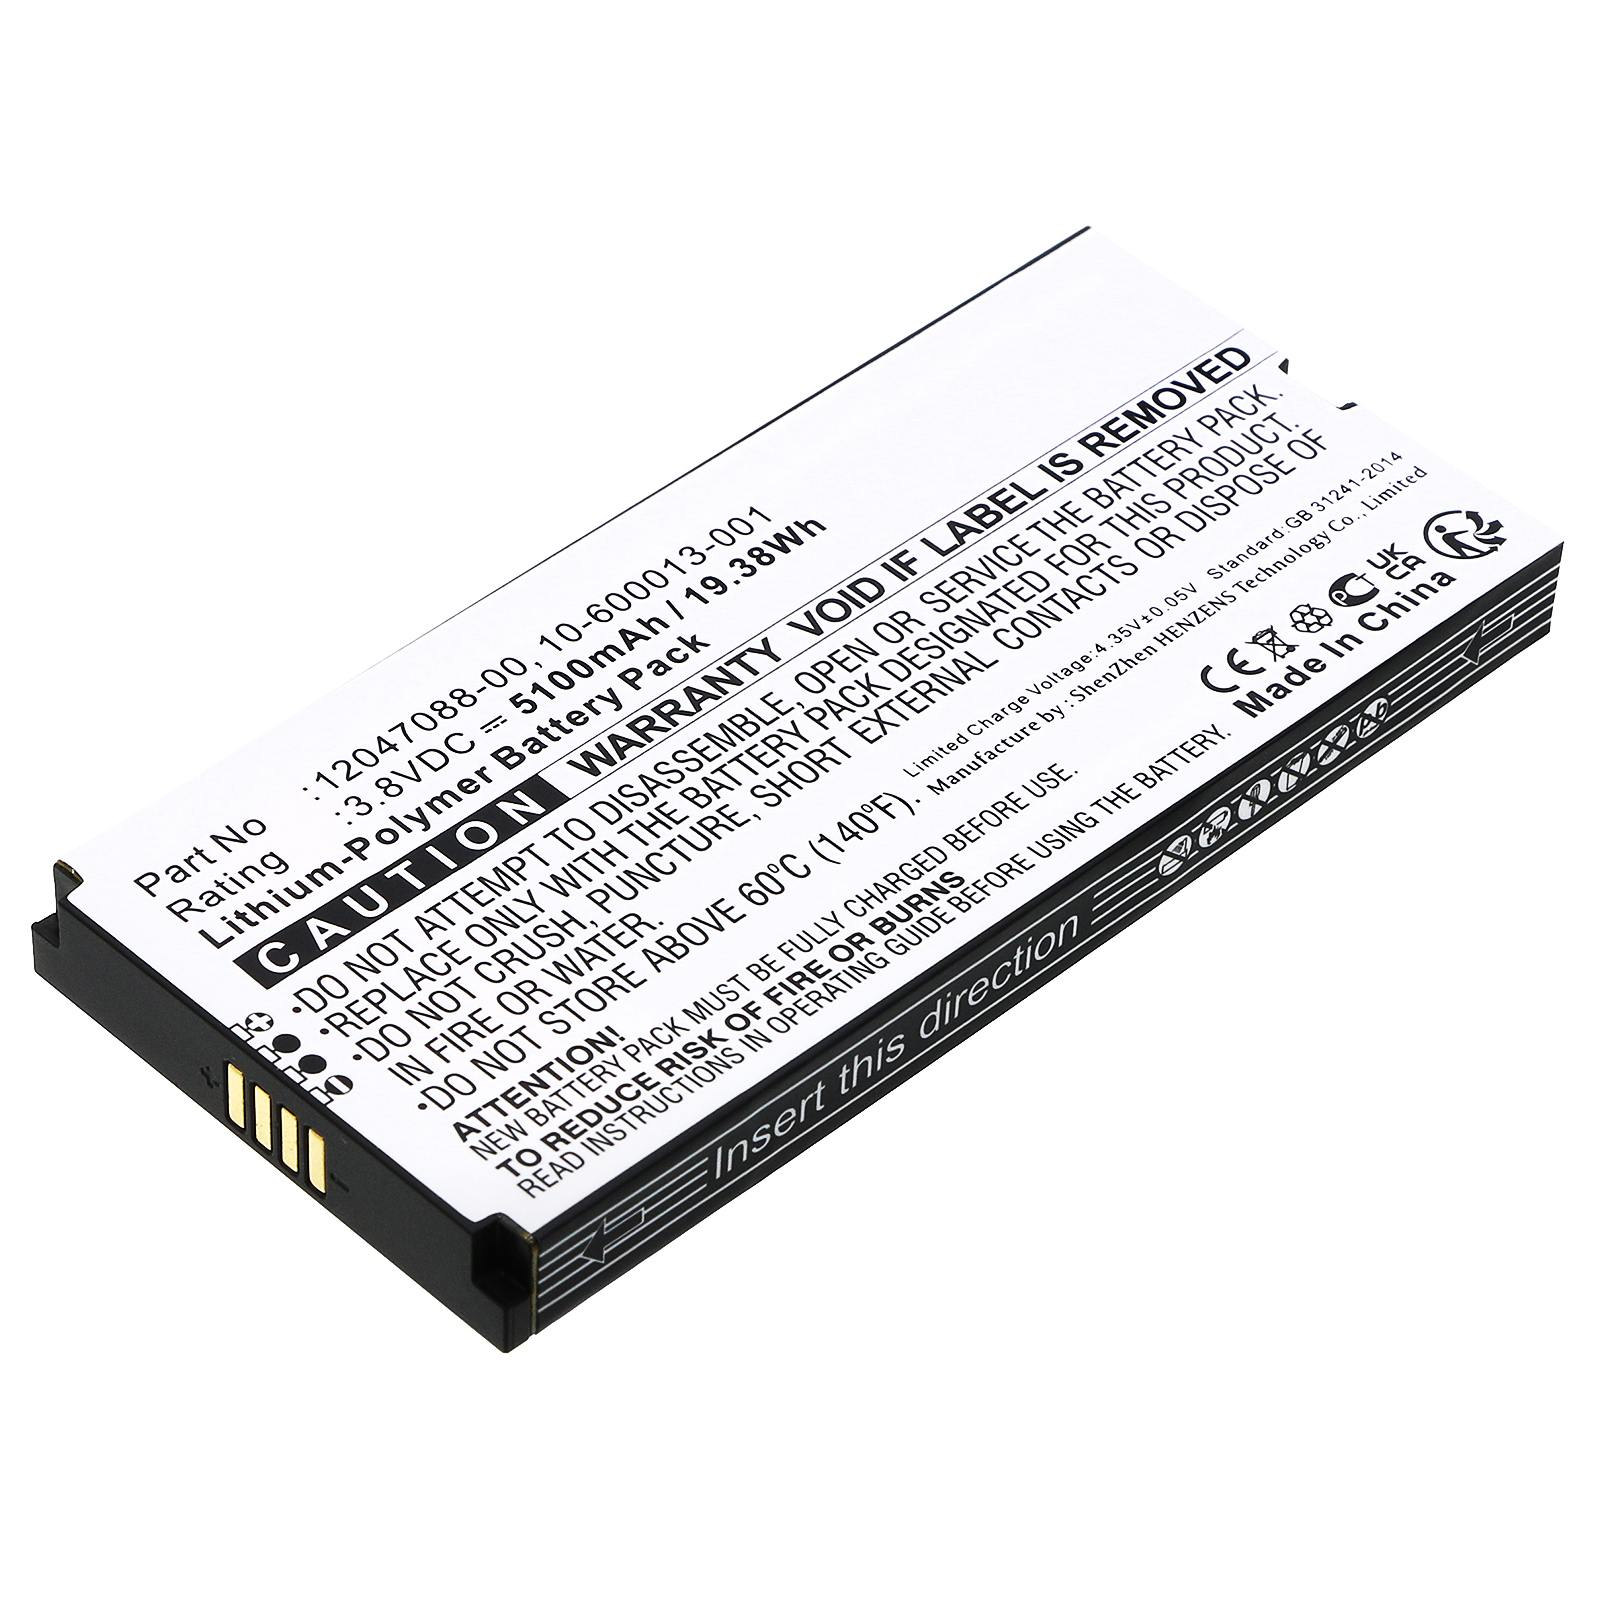 Synergy Digital Alarm System Battery, Compatible with Vivint 10-600013-001 Alarm System Battery (Li-Pol, 3.8V, 5100mAh)